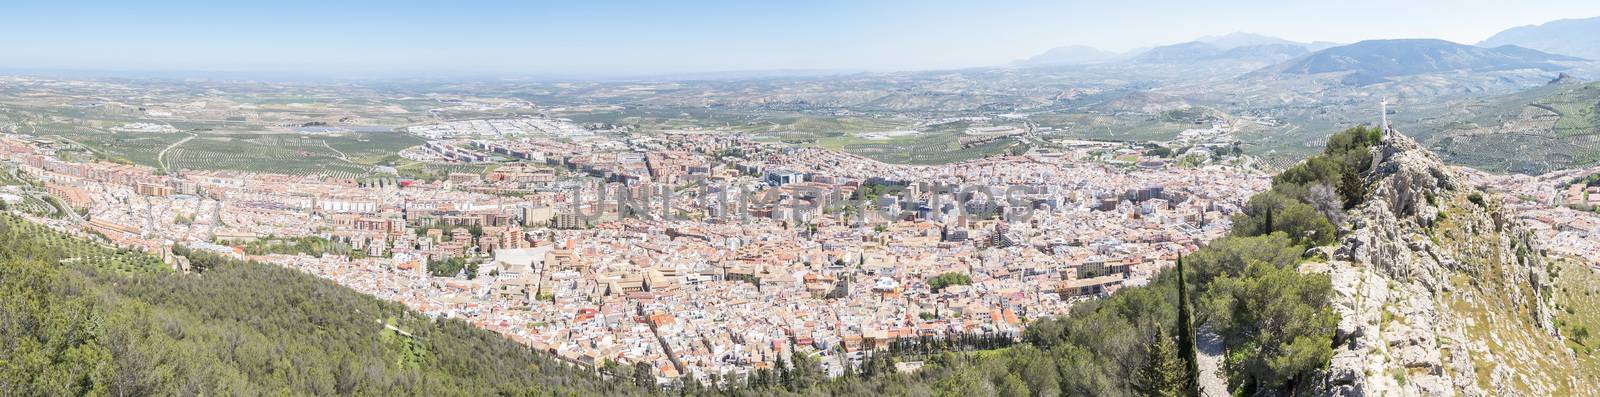 Panoramic Jaen city view from Santa Catalina Castle, Spain by max8xam